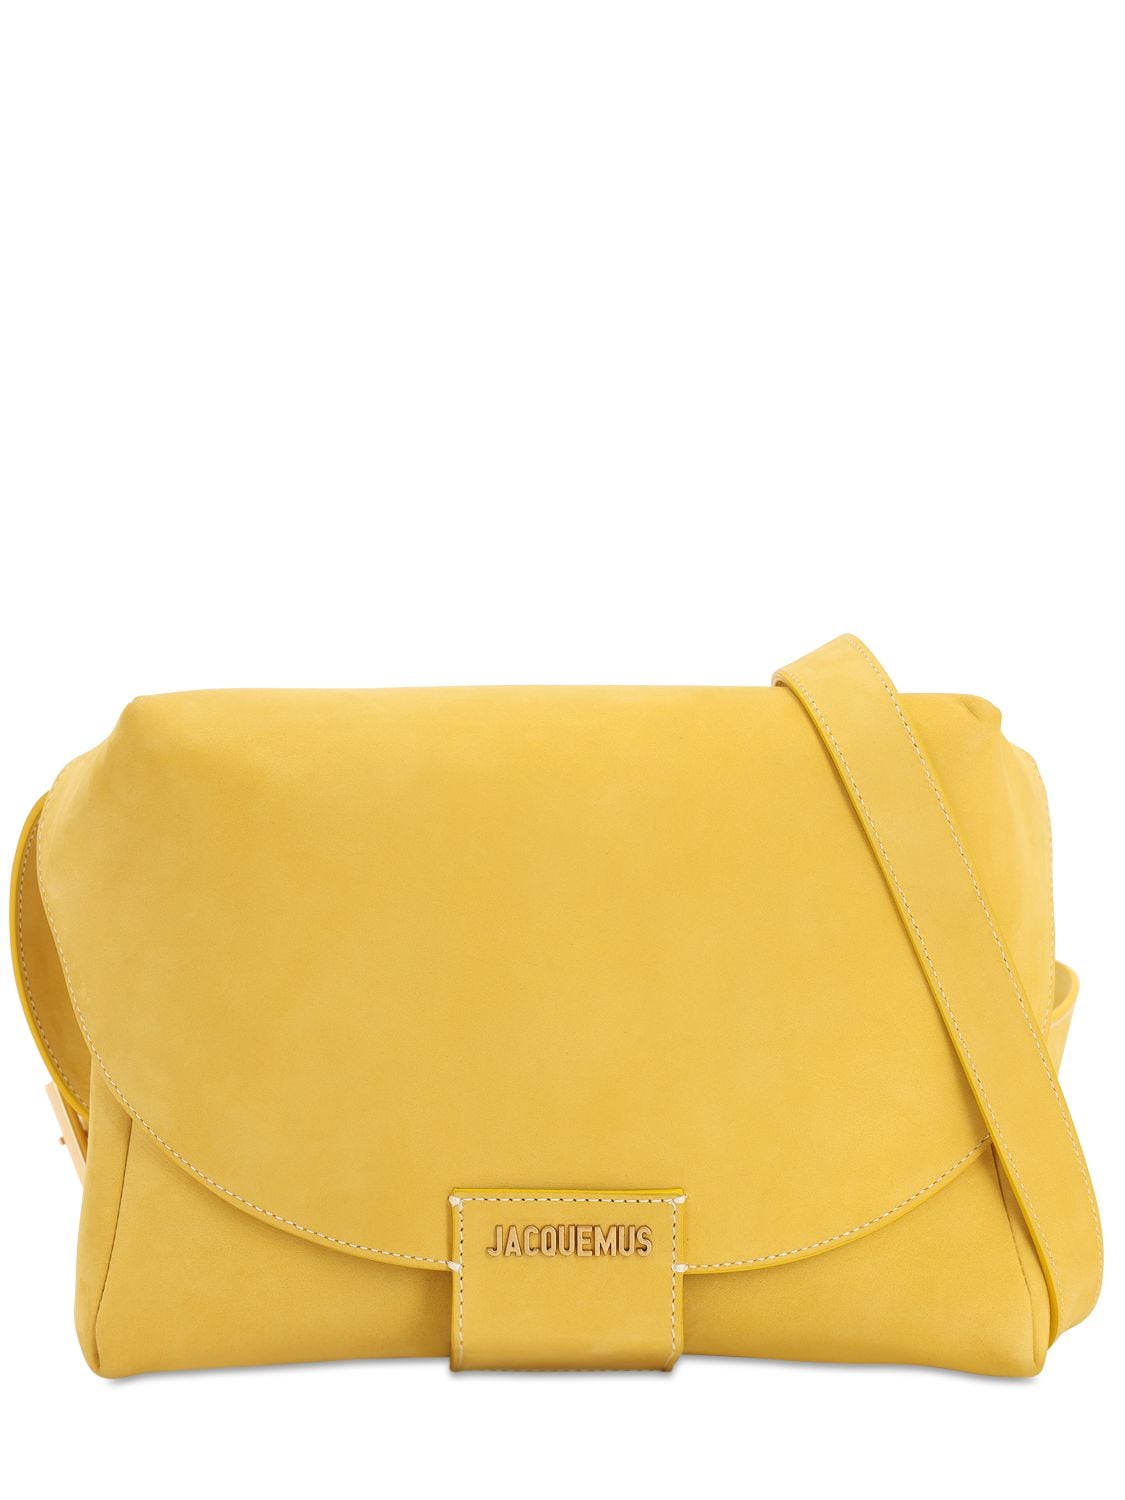 Jacquemus Le Sac Manosque Suede Belt Bag In Yellow